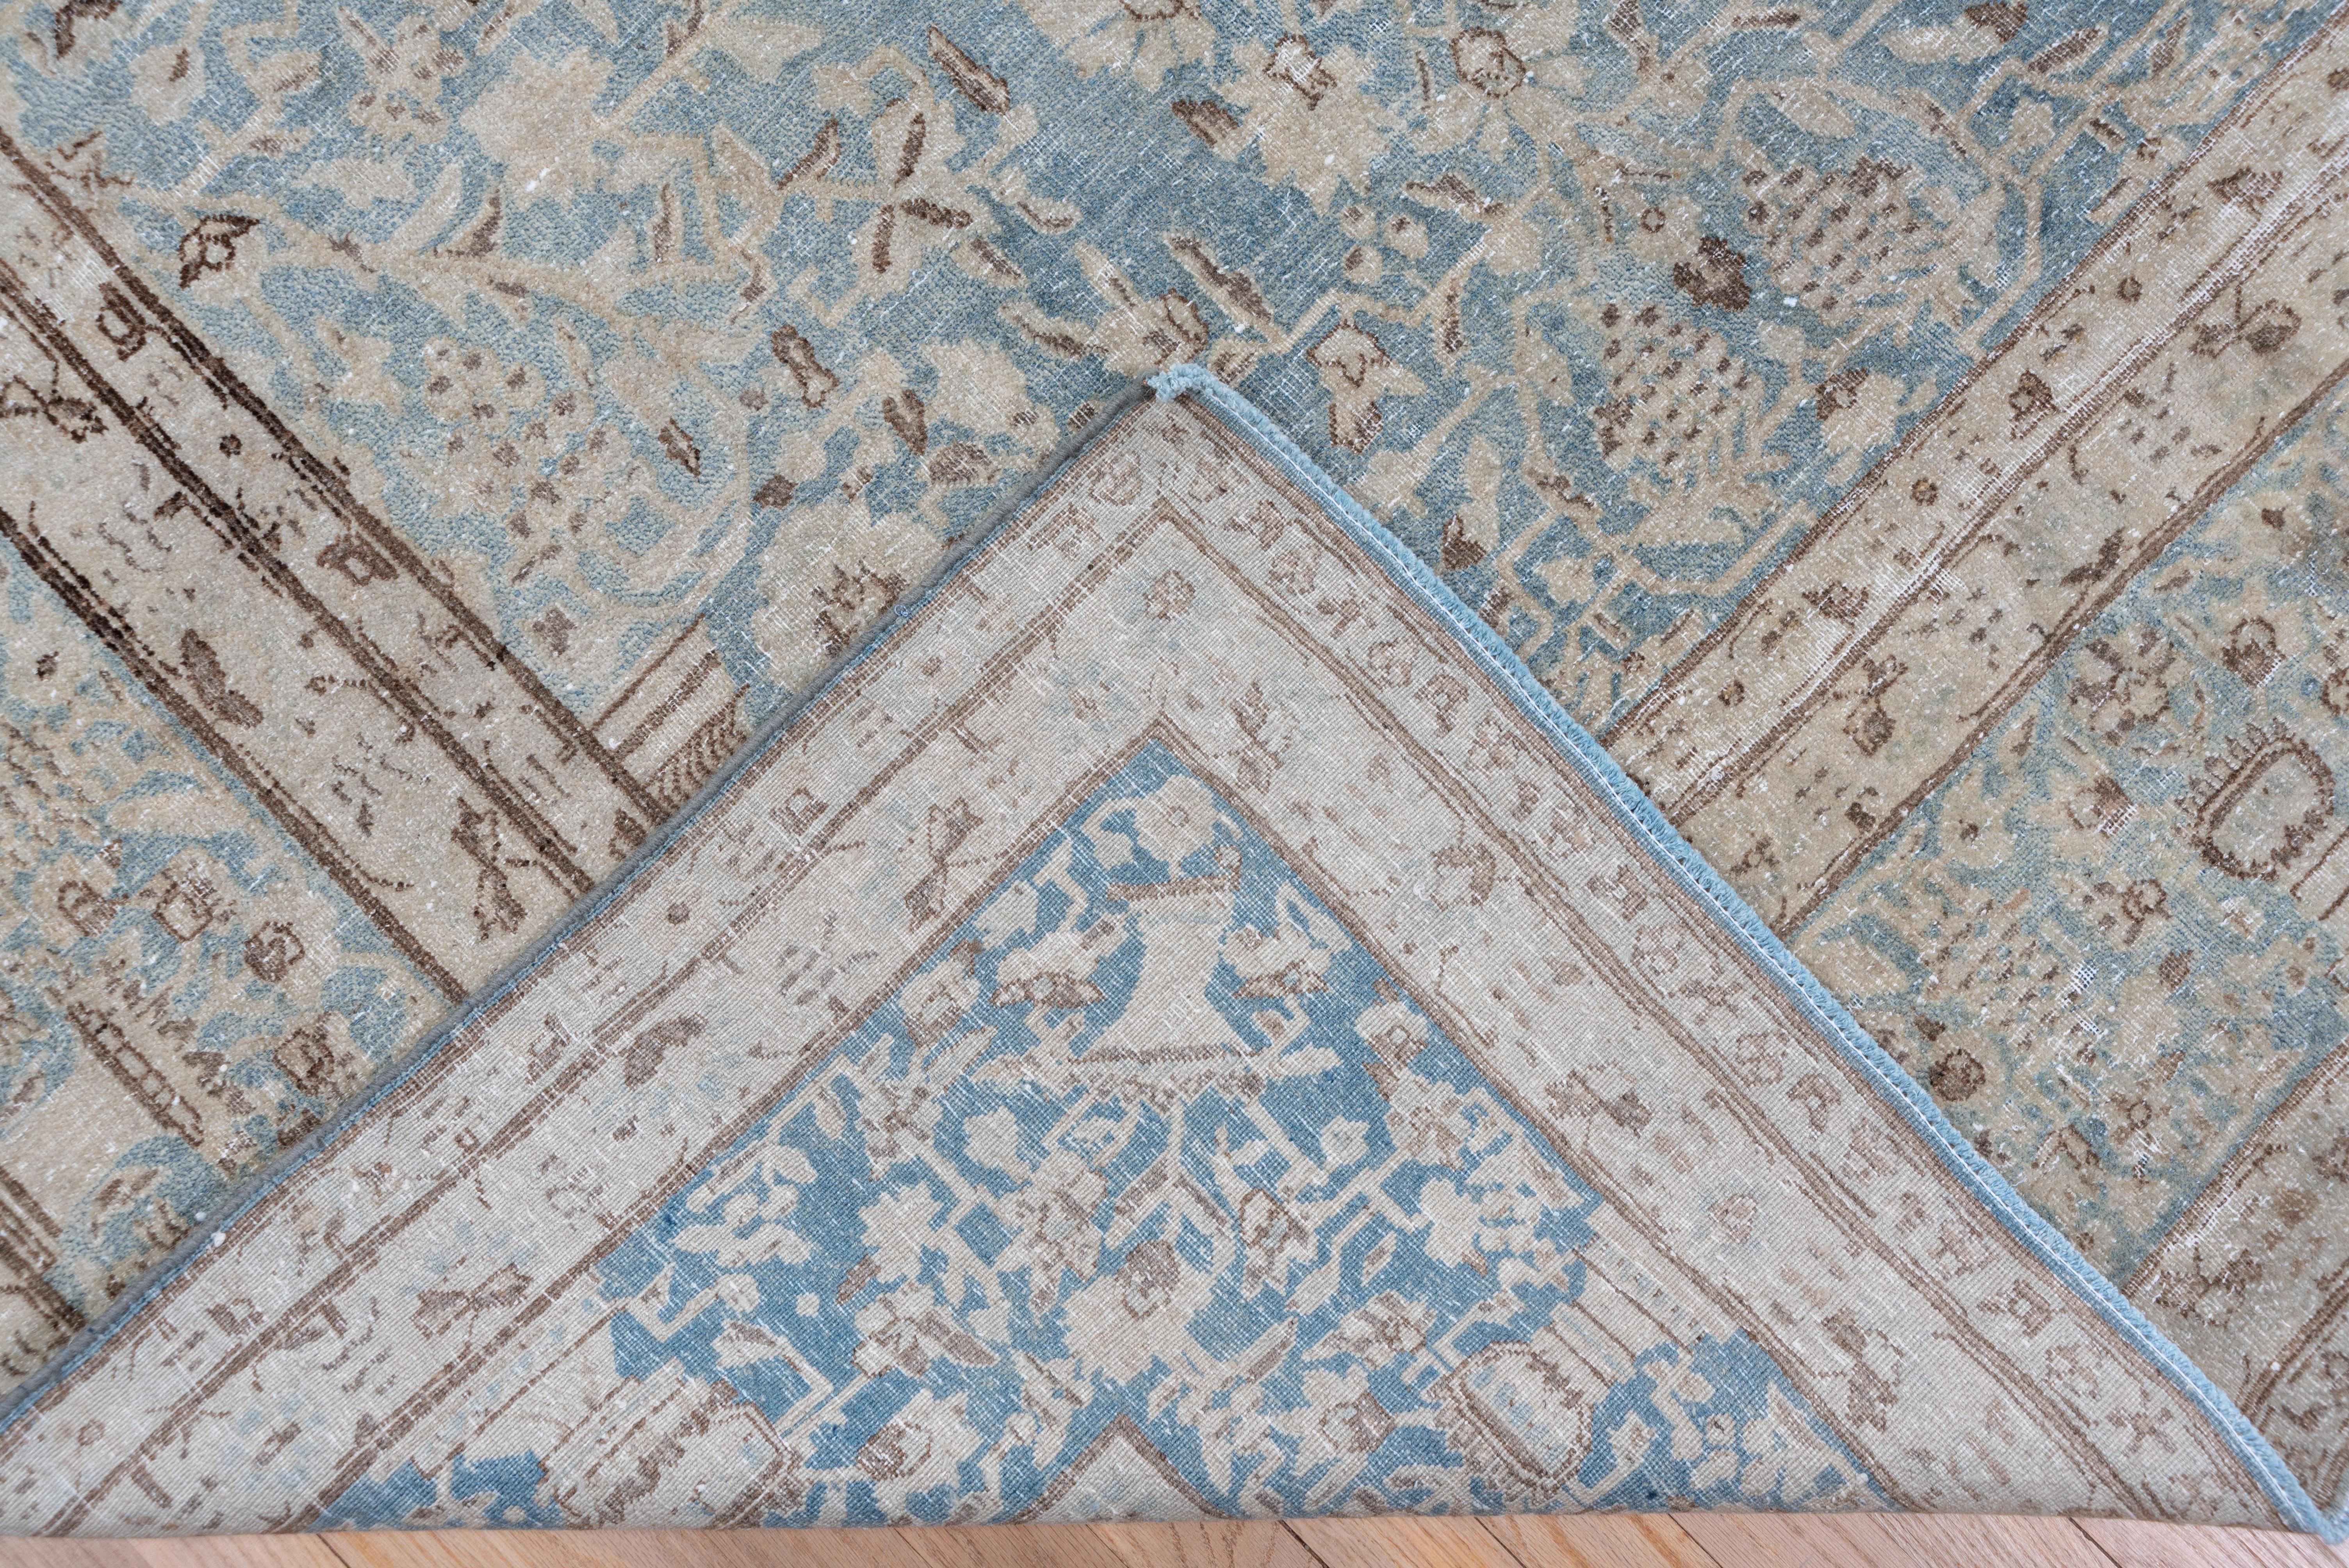 Light Blue Antique Persian Kerman Carpet with Vase Design, Allover Field For Sale 3